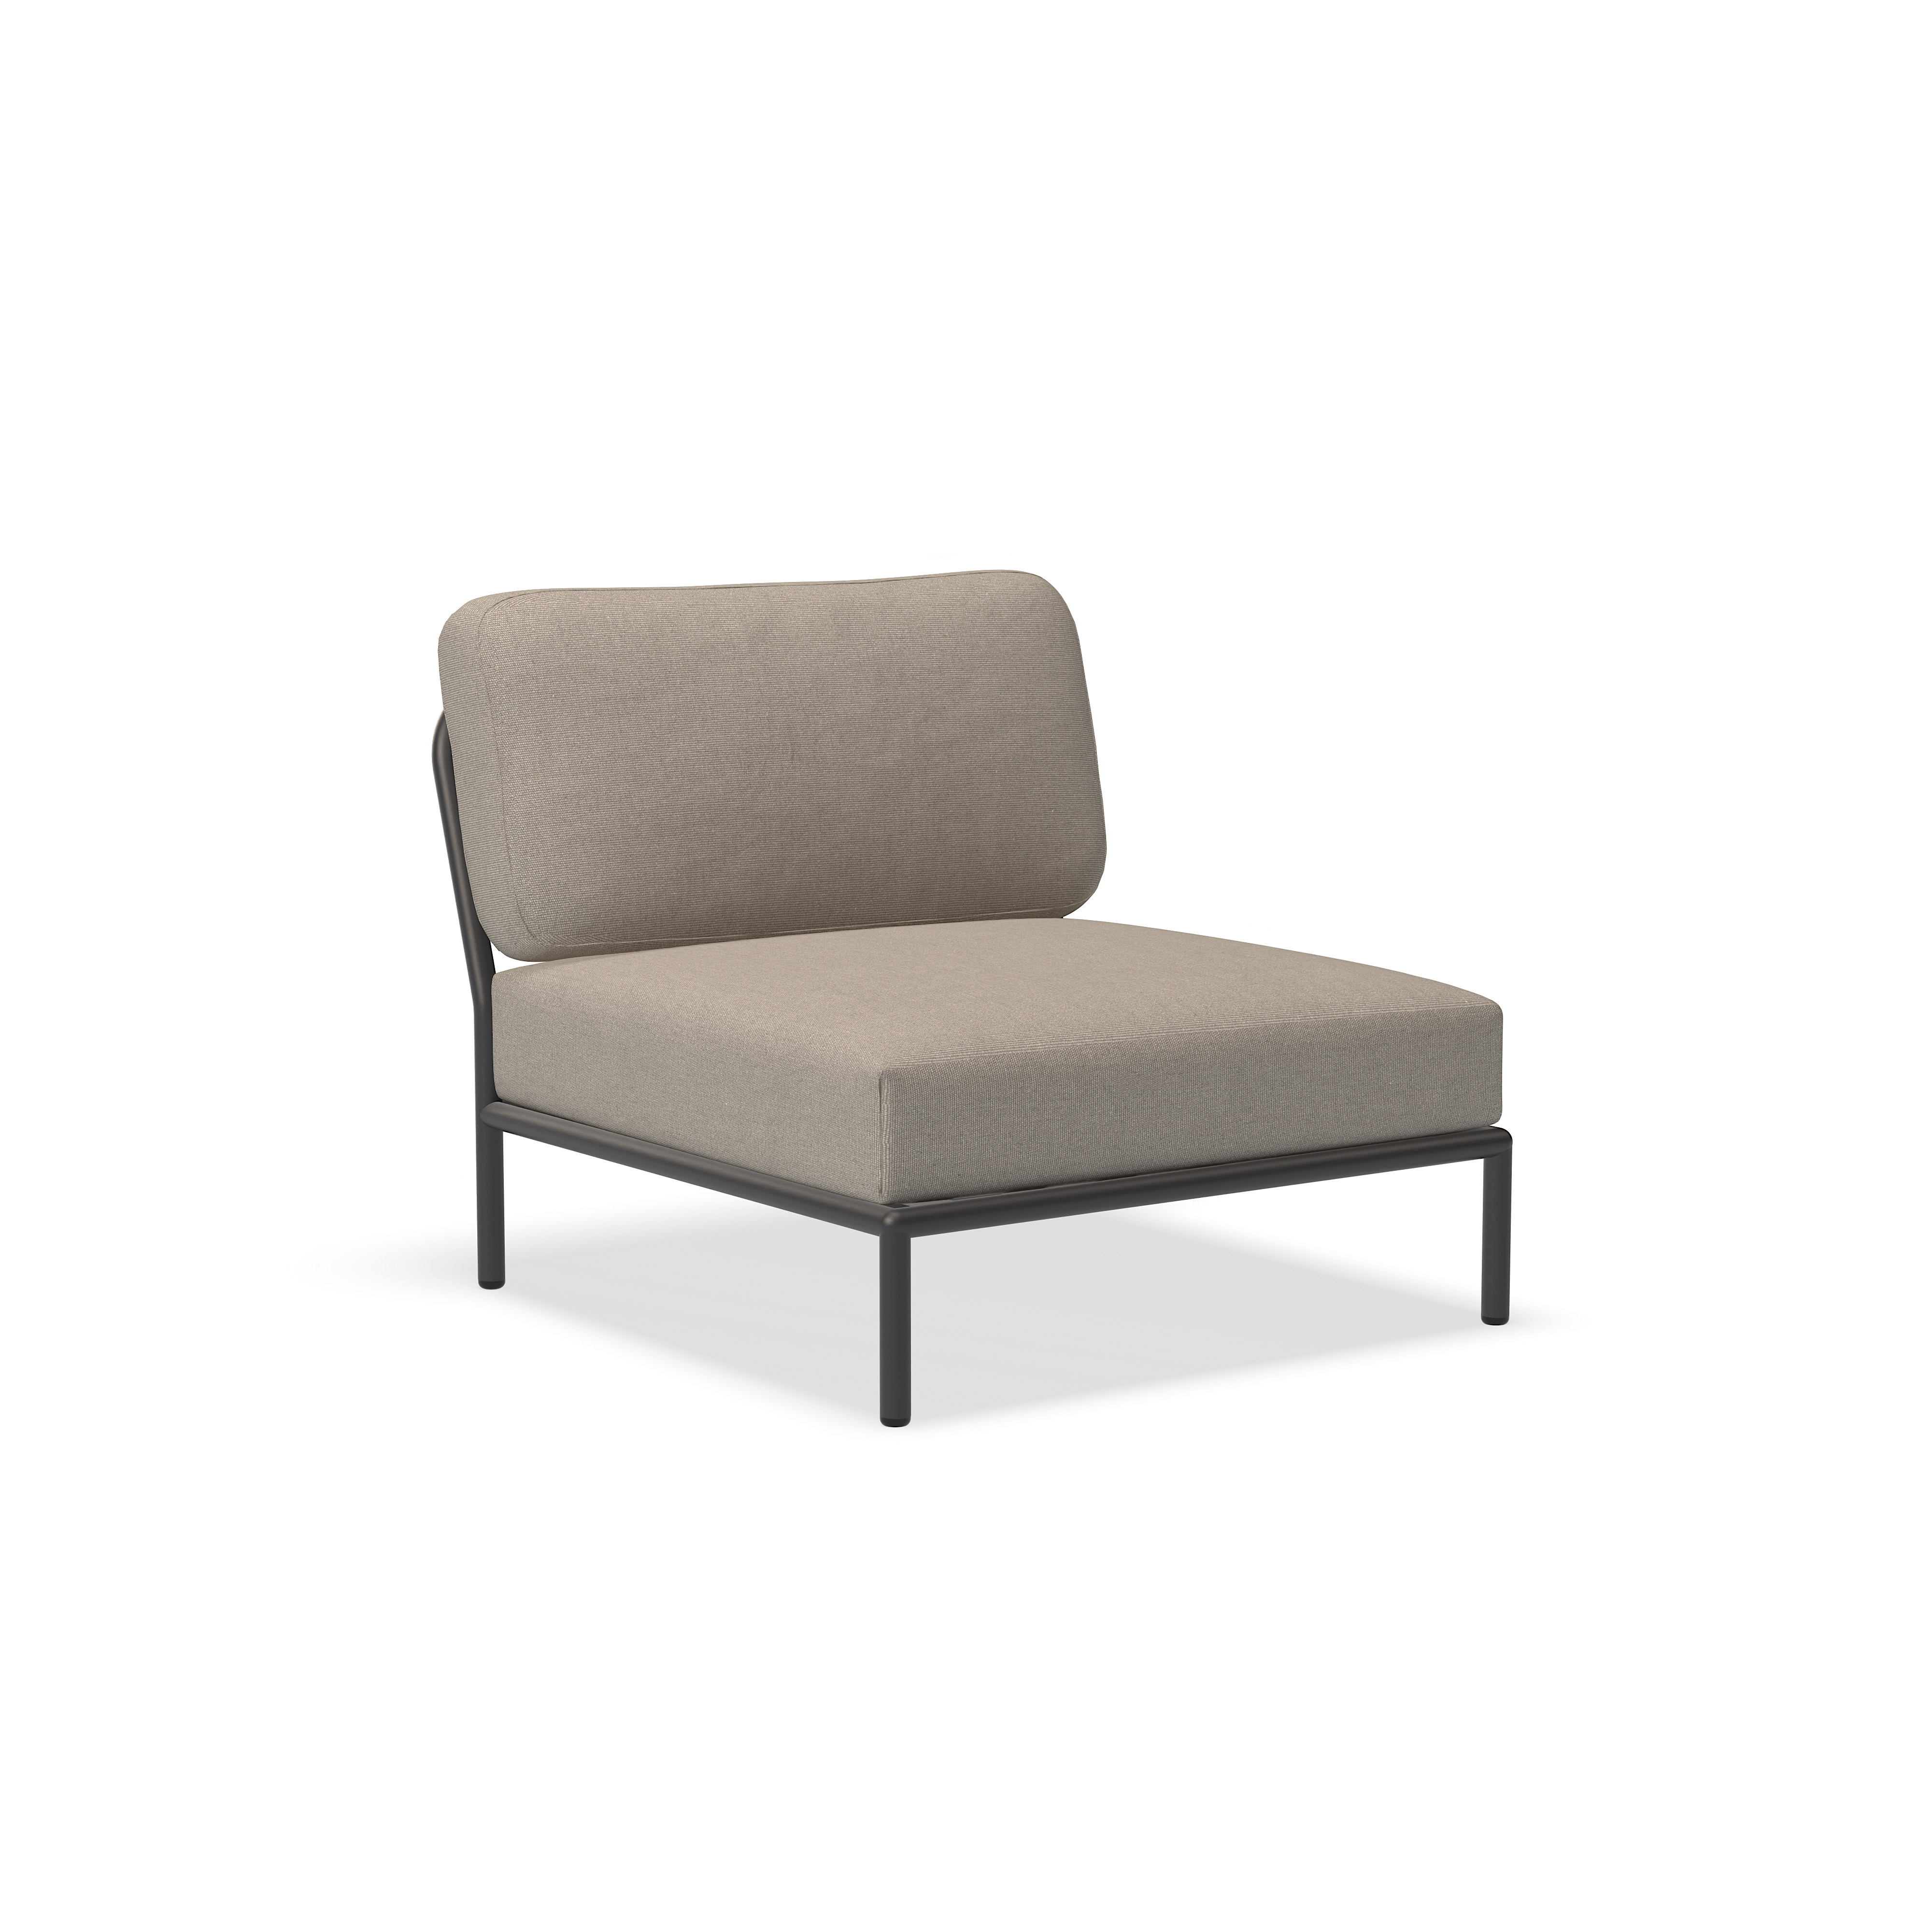 Chair - 12205-9251 - Chair, Ash (HERITAGE), dark grey structure